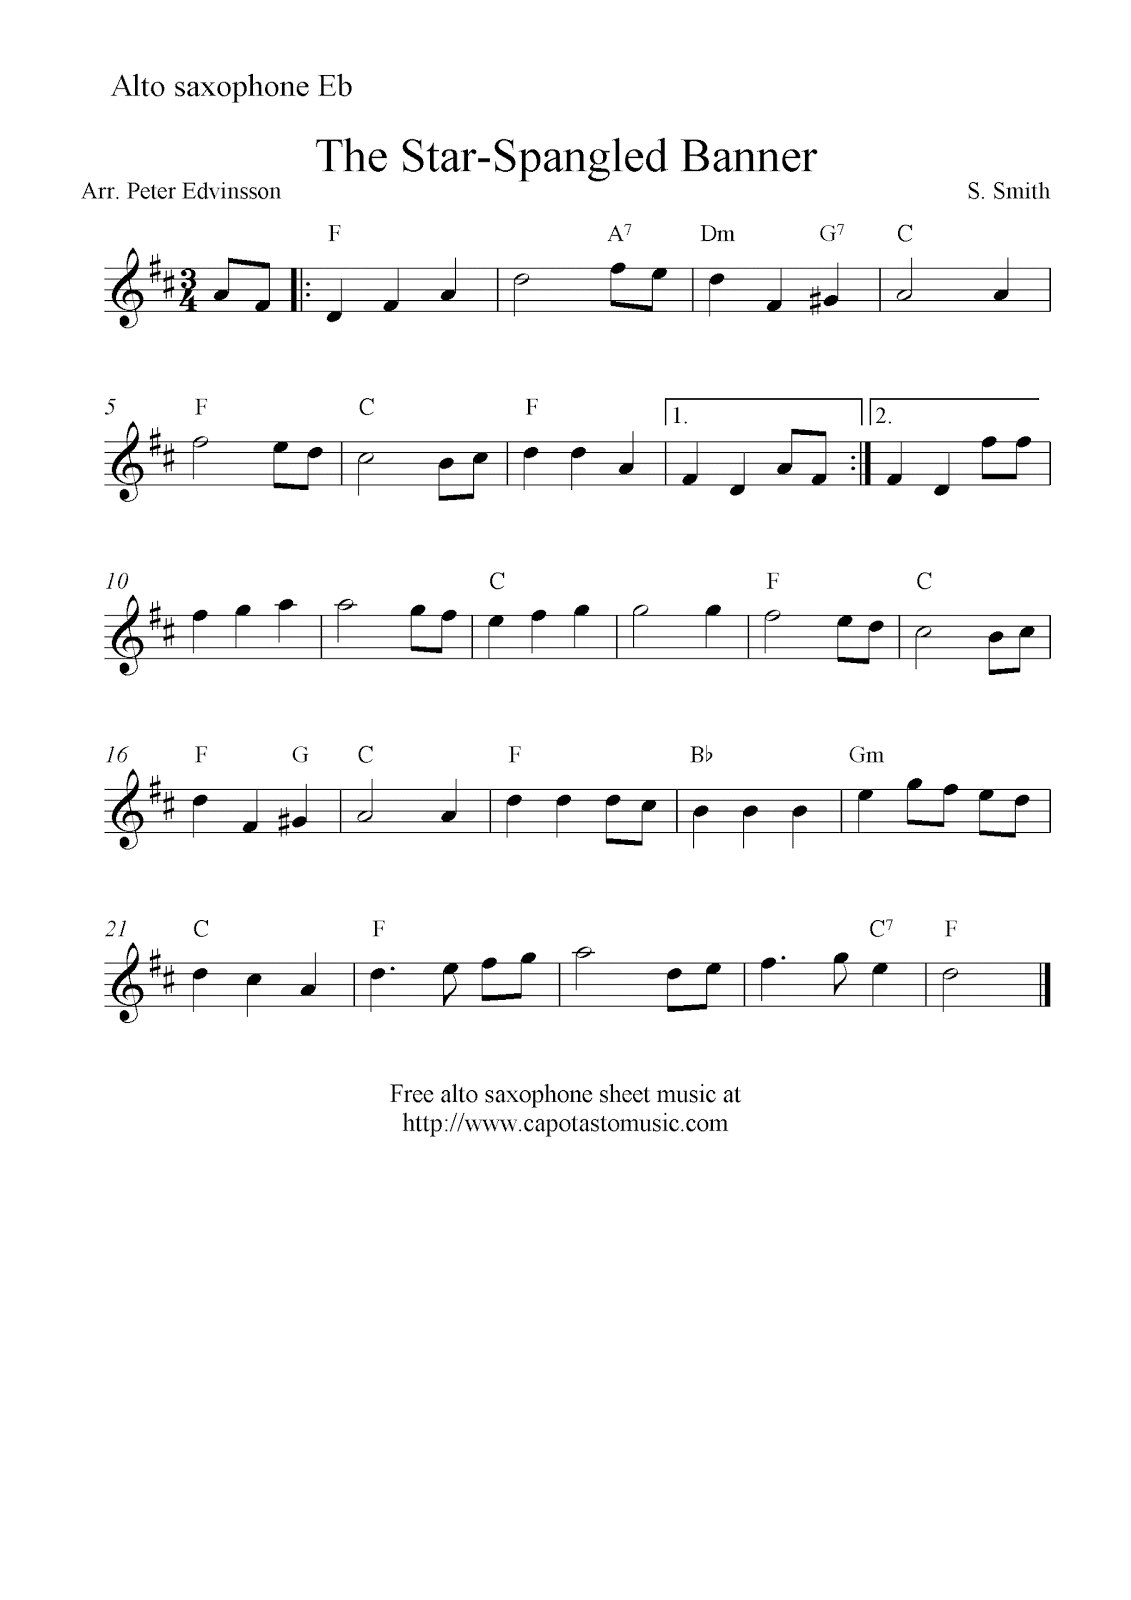 The Star-Spangled Banner, Free Alto Saxophone Sheet Music Notes - Free Printable Piano Sheet Music For The Star Spangled Banner